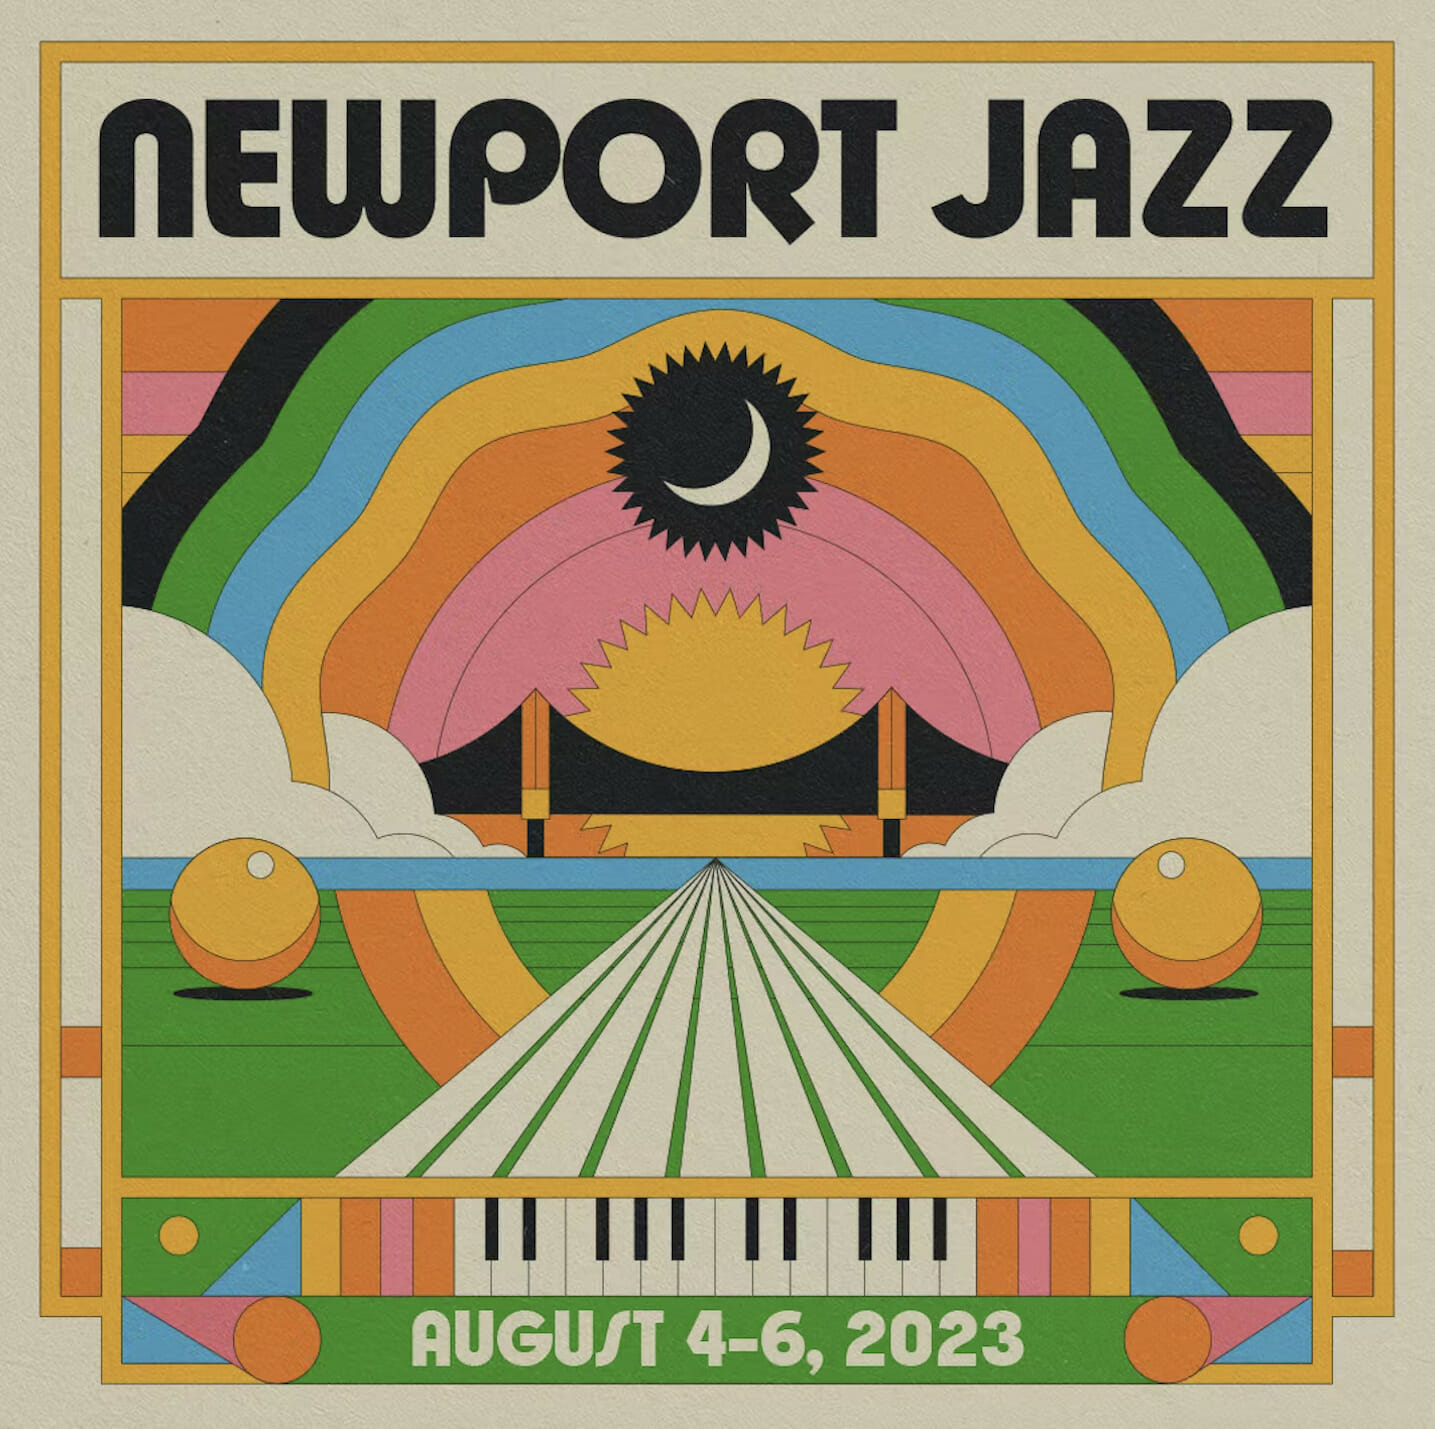 Newport Jazz Festival Outlines 2023 Artist Lineup: Herbie Hancock, Joe Russo’s Almost Dead, Jon Batiste and More